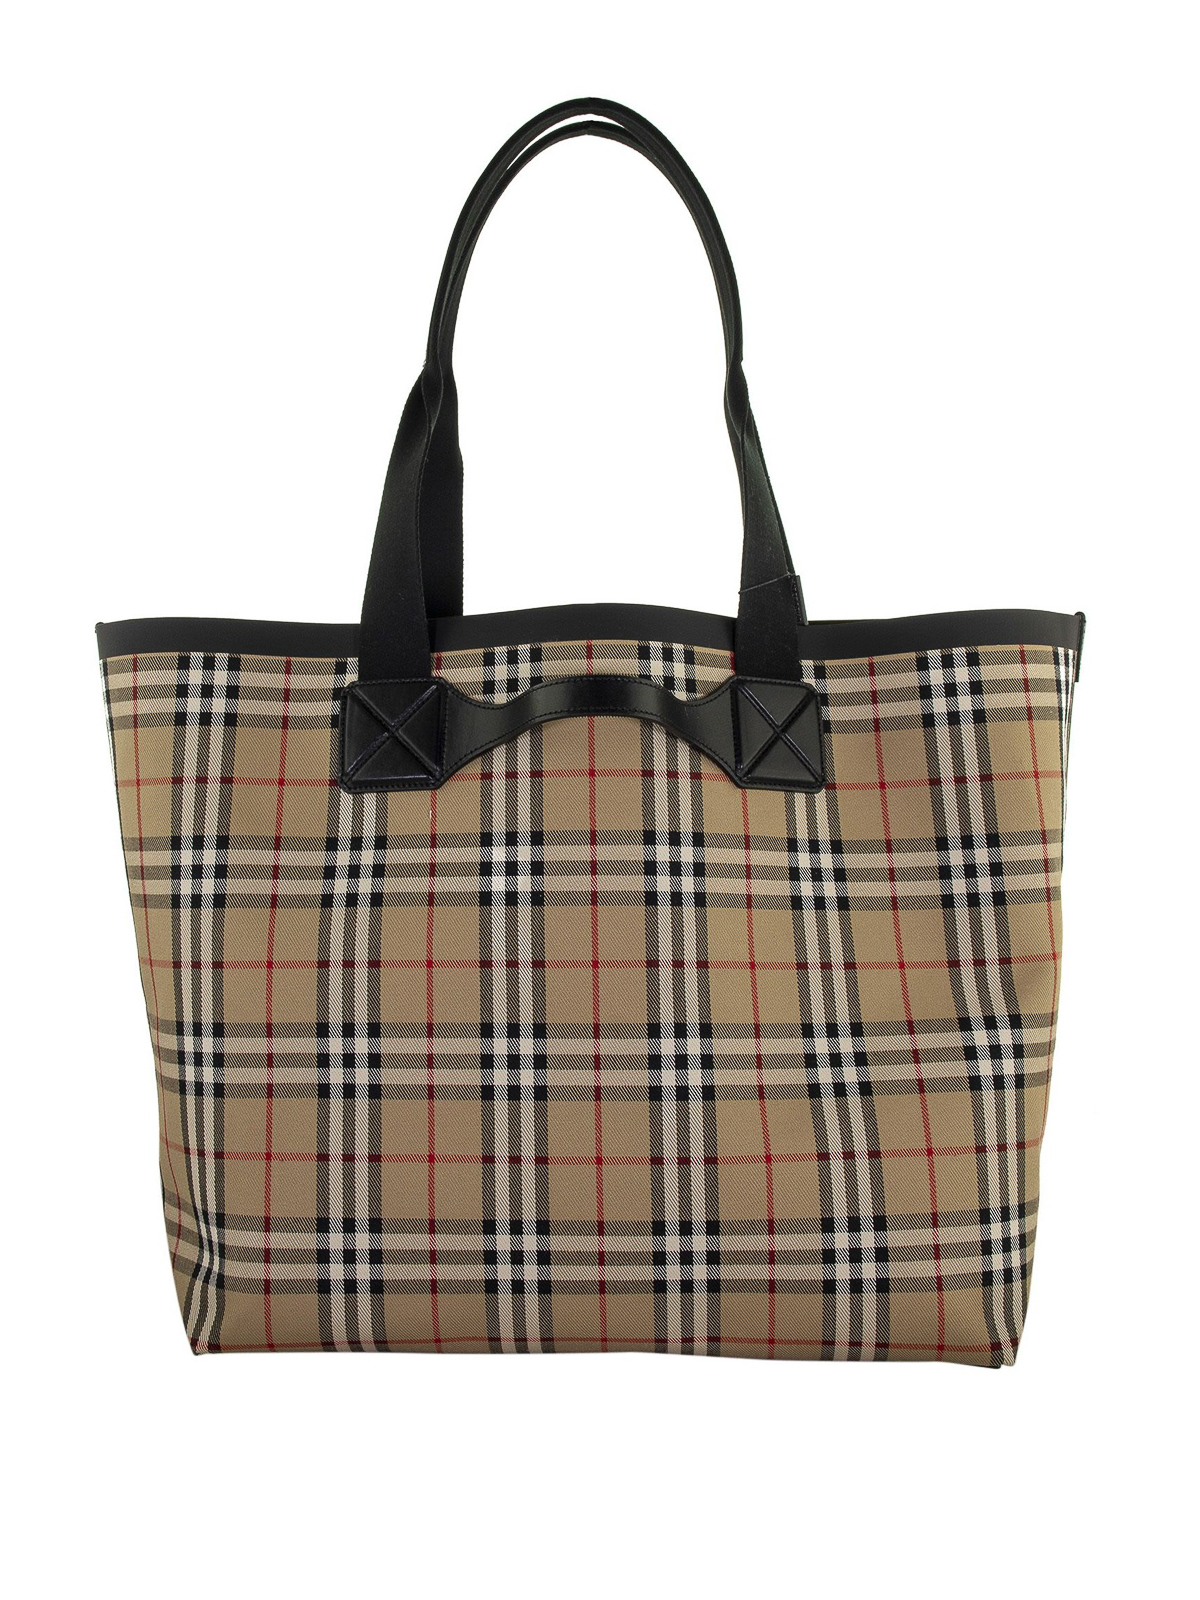 Totes bags Burberry - Austen Vintage check cotton large tote - 8016805